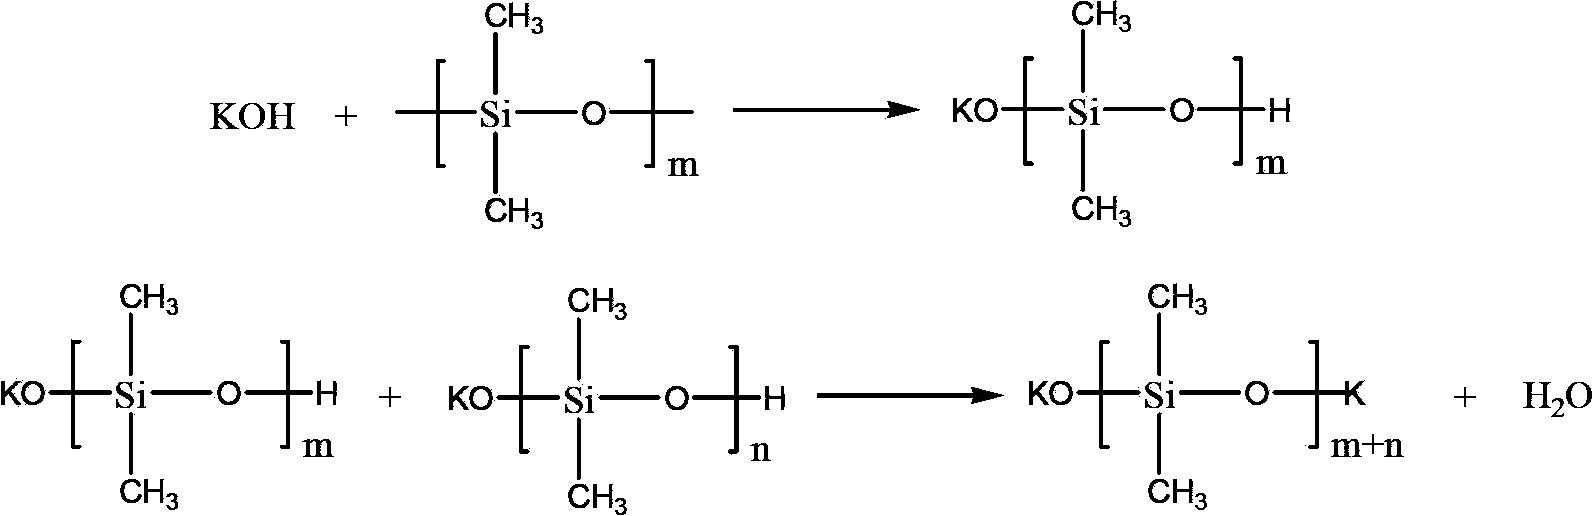 Method for preparing siloxane potassium alcoholate